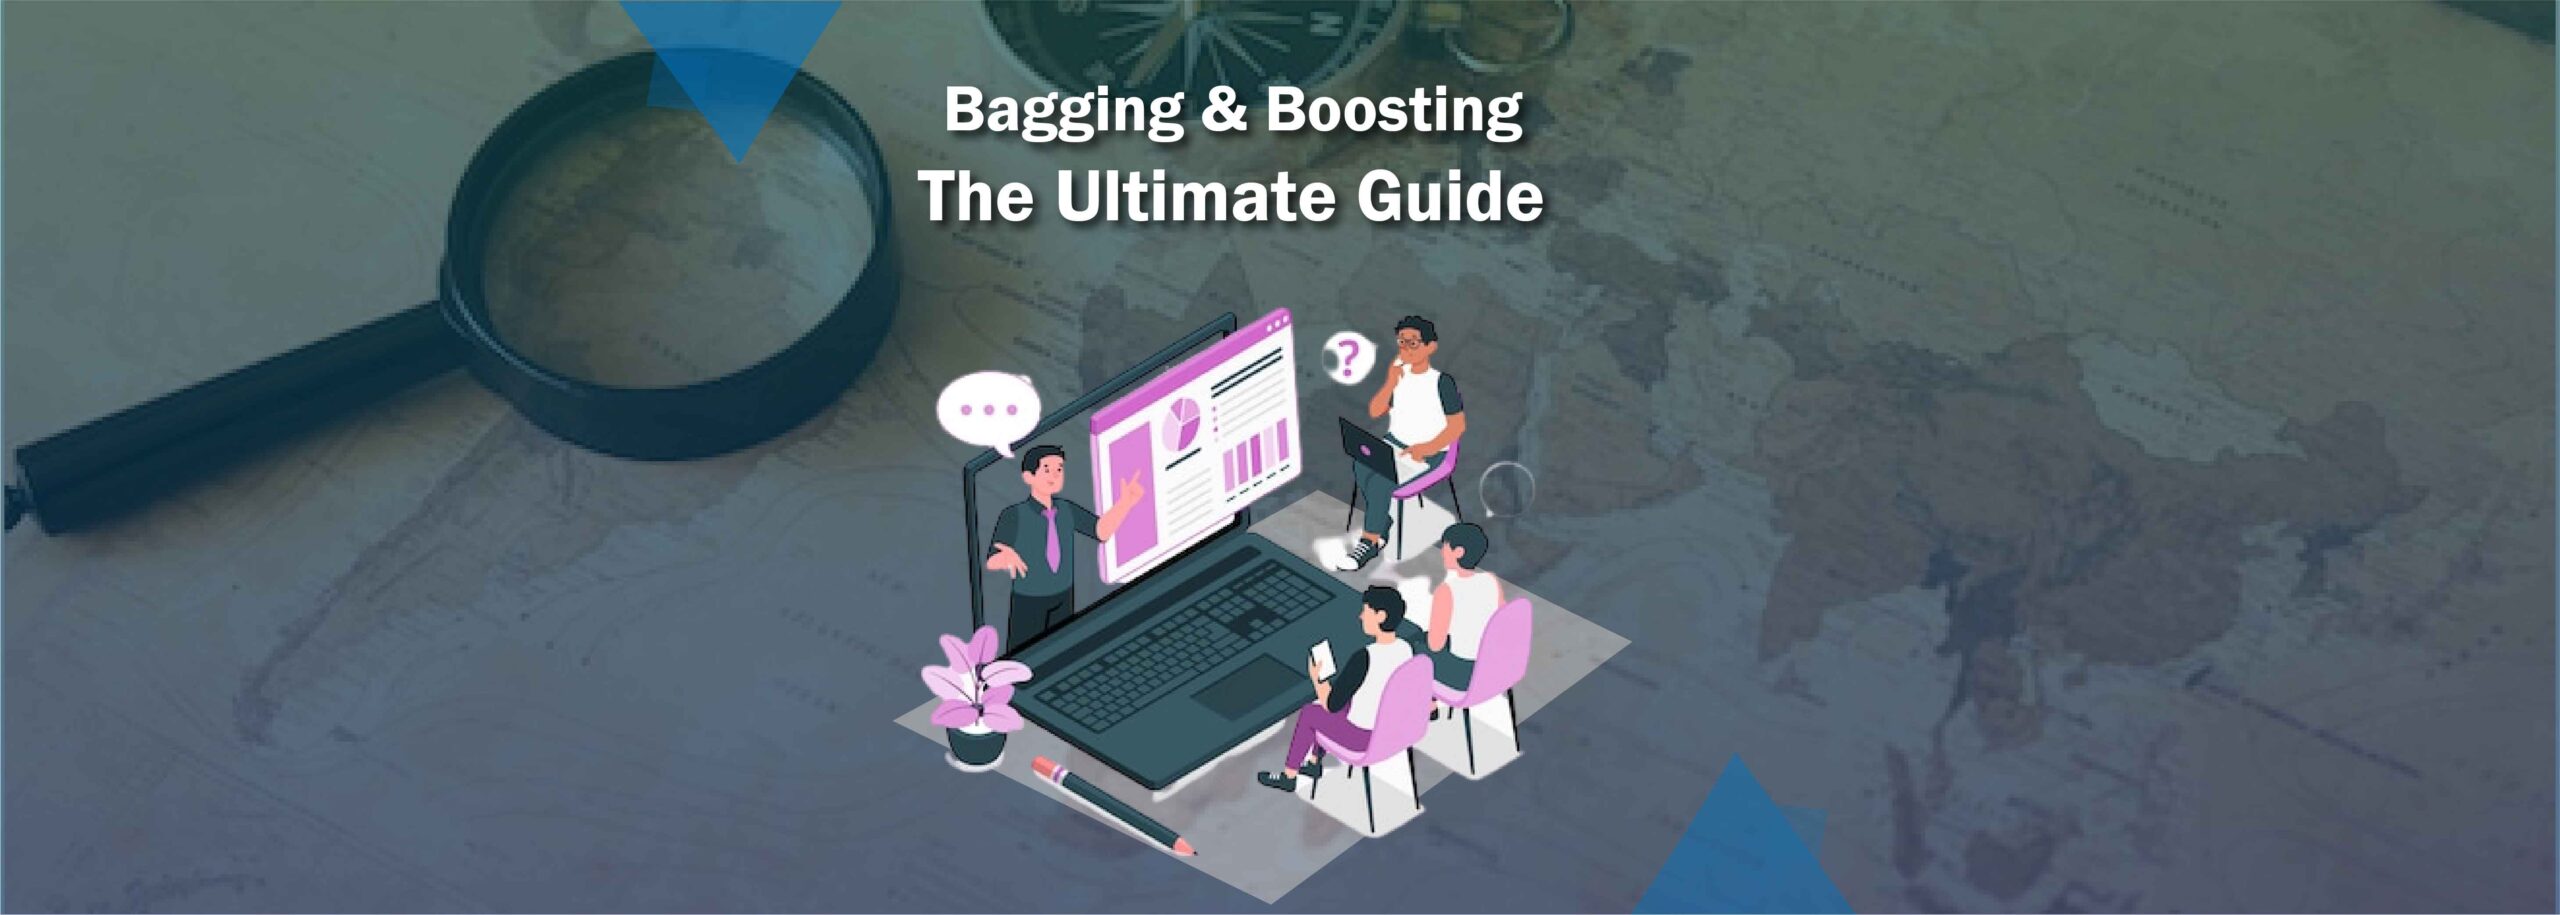 Bagging and Boosting